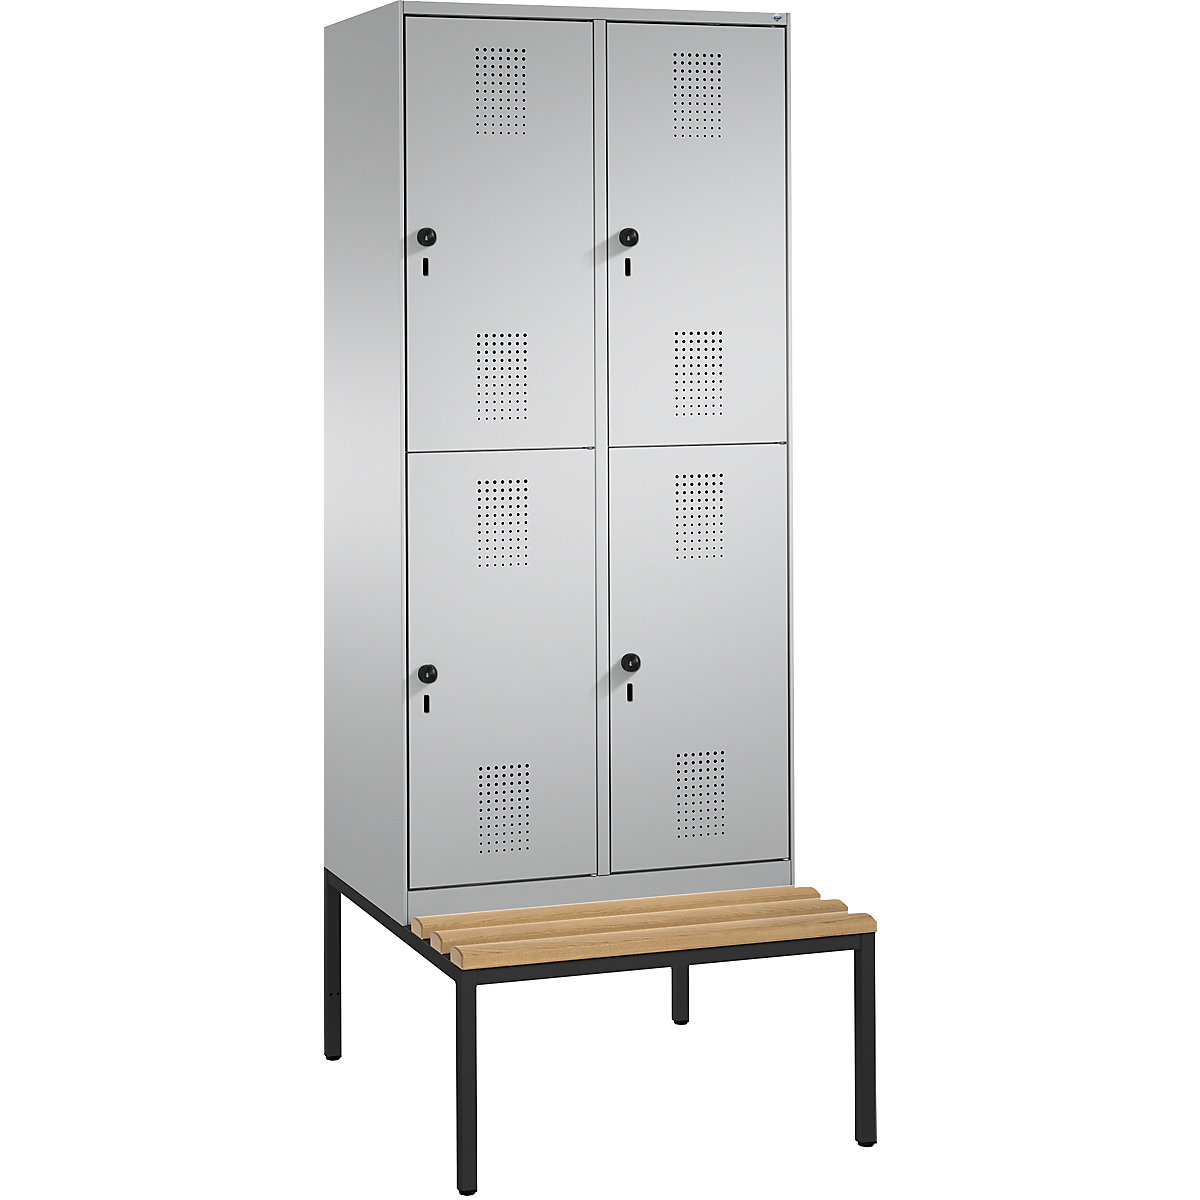 EVOLO cloakroom locker, double tier, with bench – C+P, 2 compartments, 2 shelf compartments each, compartment width 400 mm, white aluminium / white aluminium-4